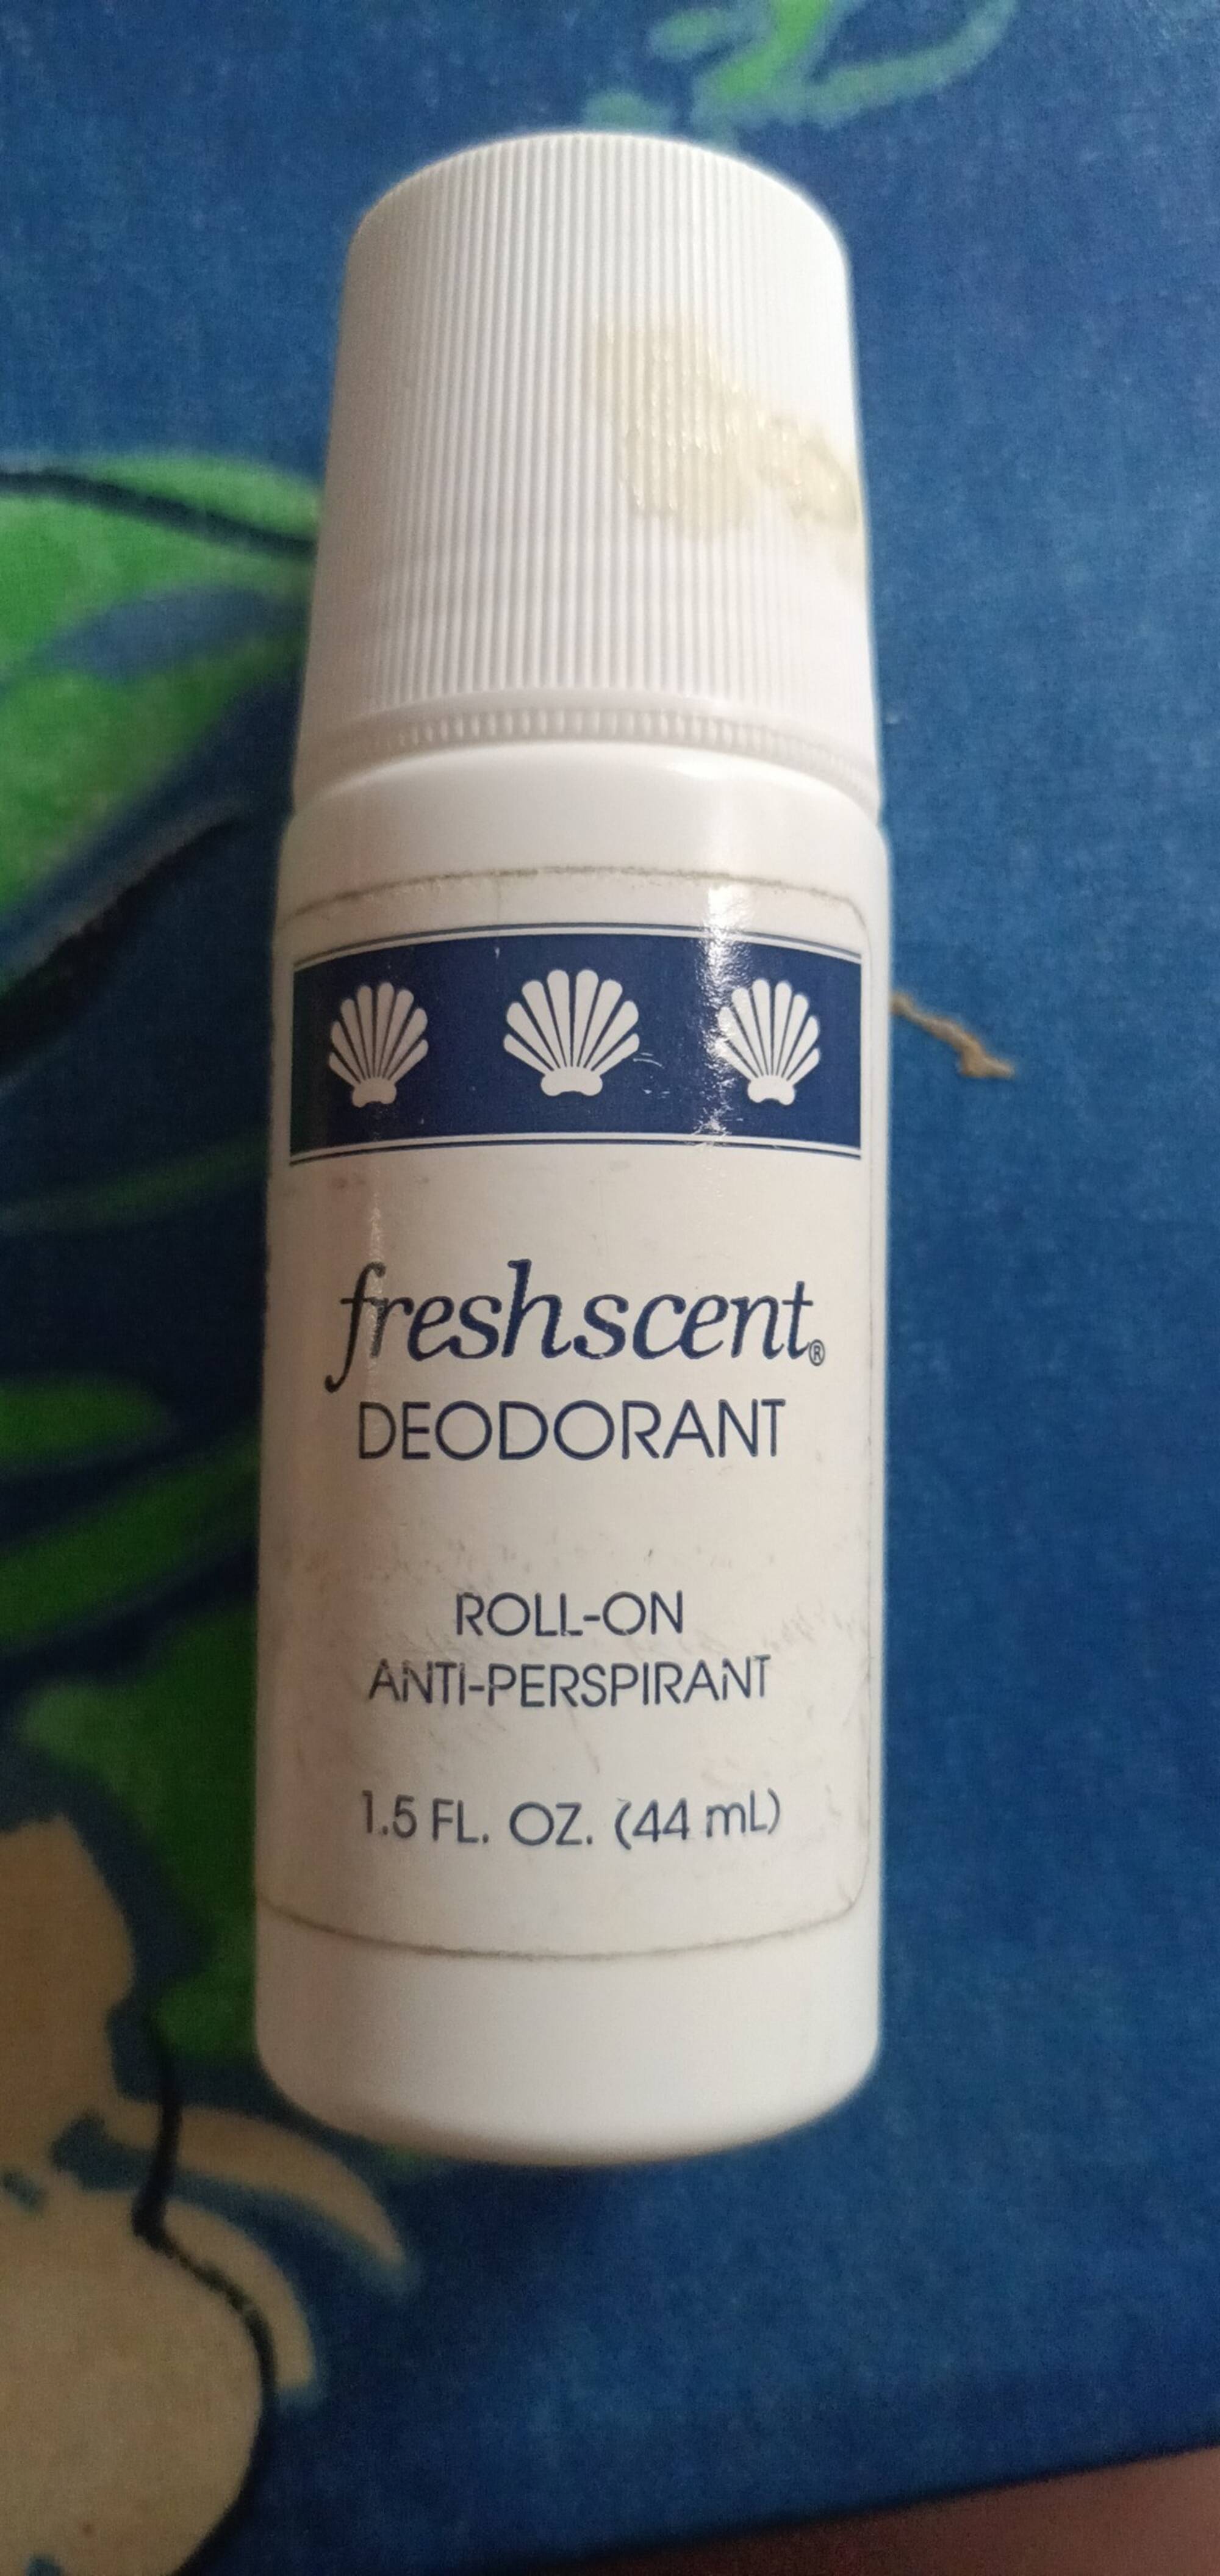 FRESHSCENT - Déodorant roll-on anti-perspirant